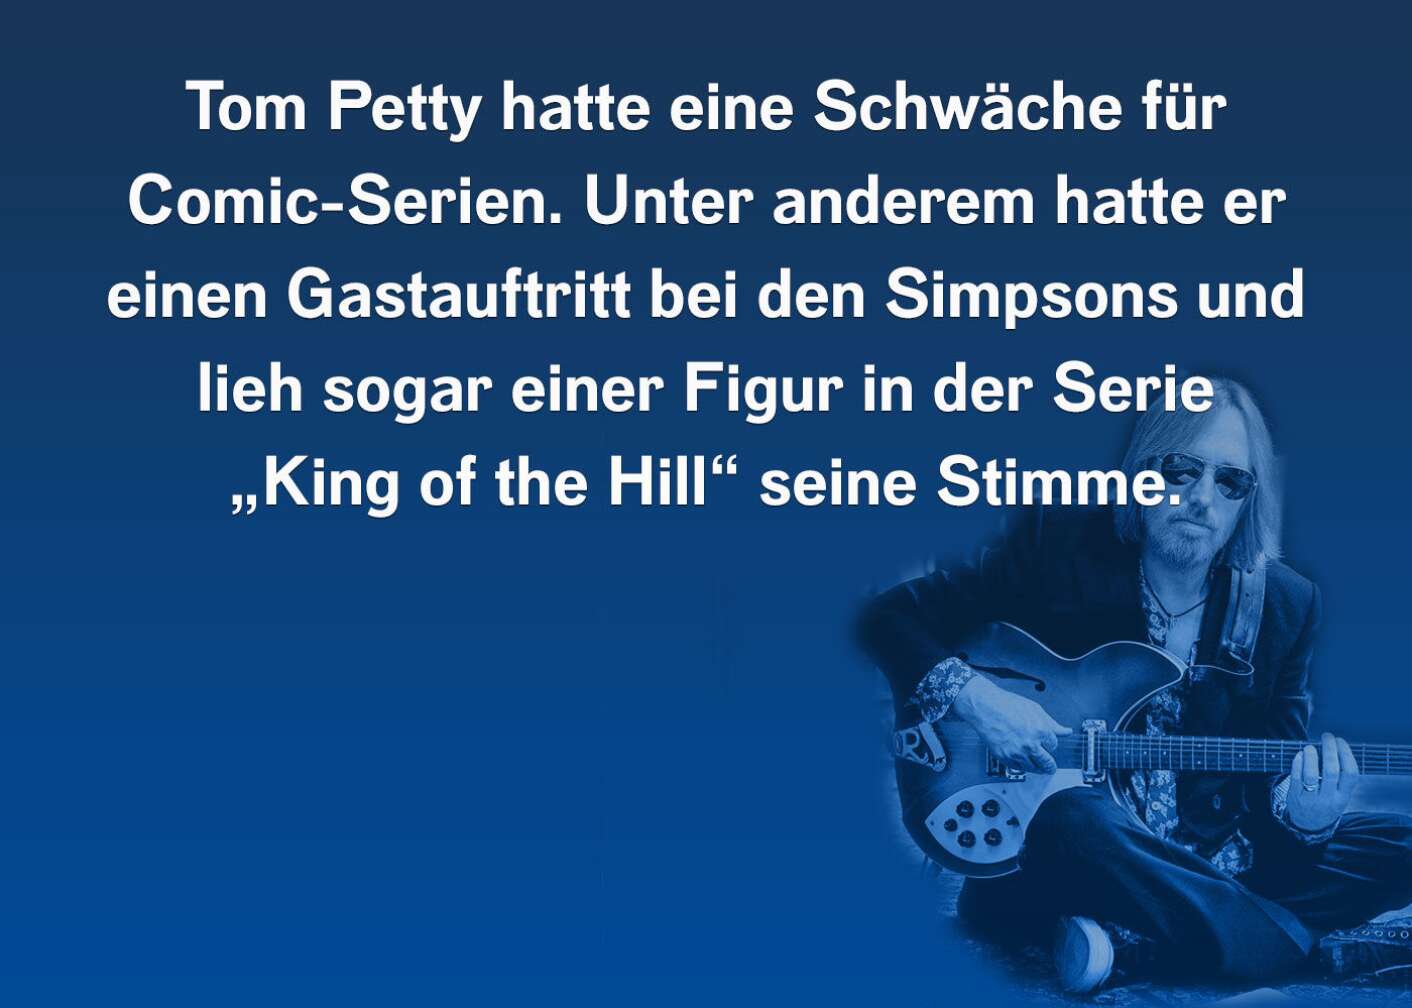 10 Fakten über Tom Petty